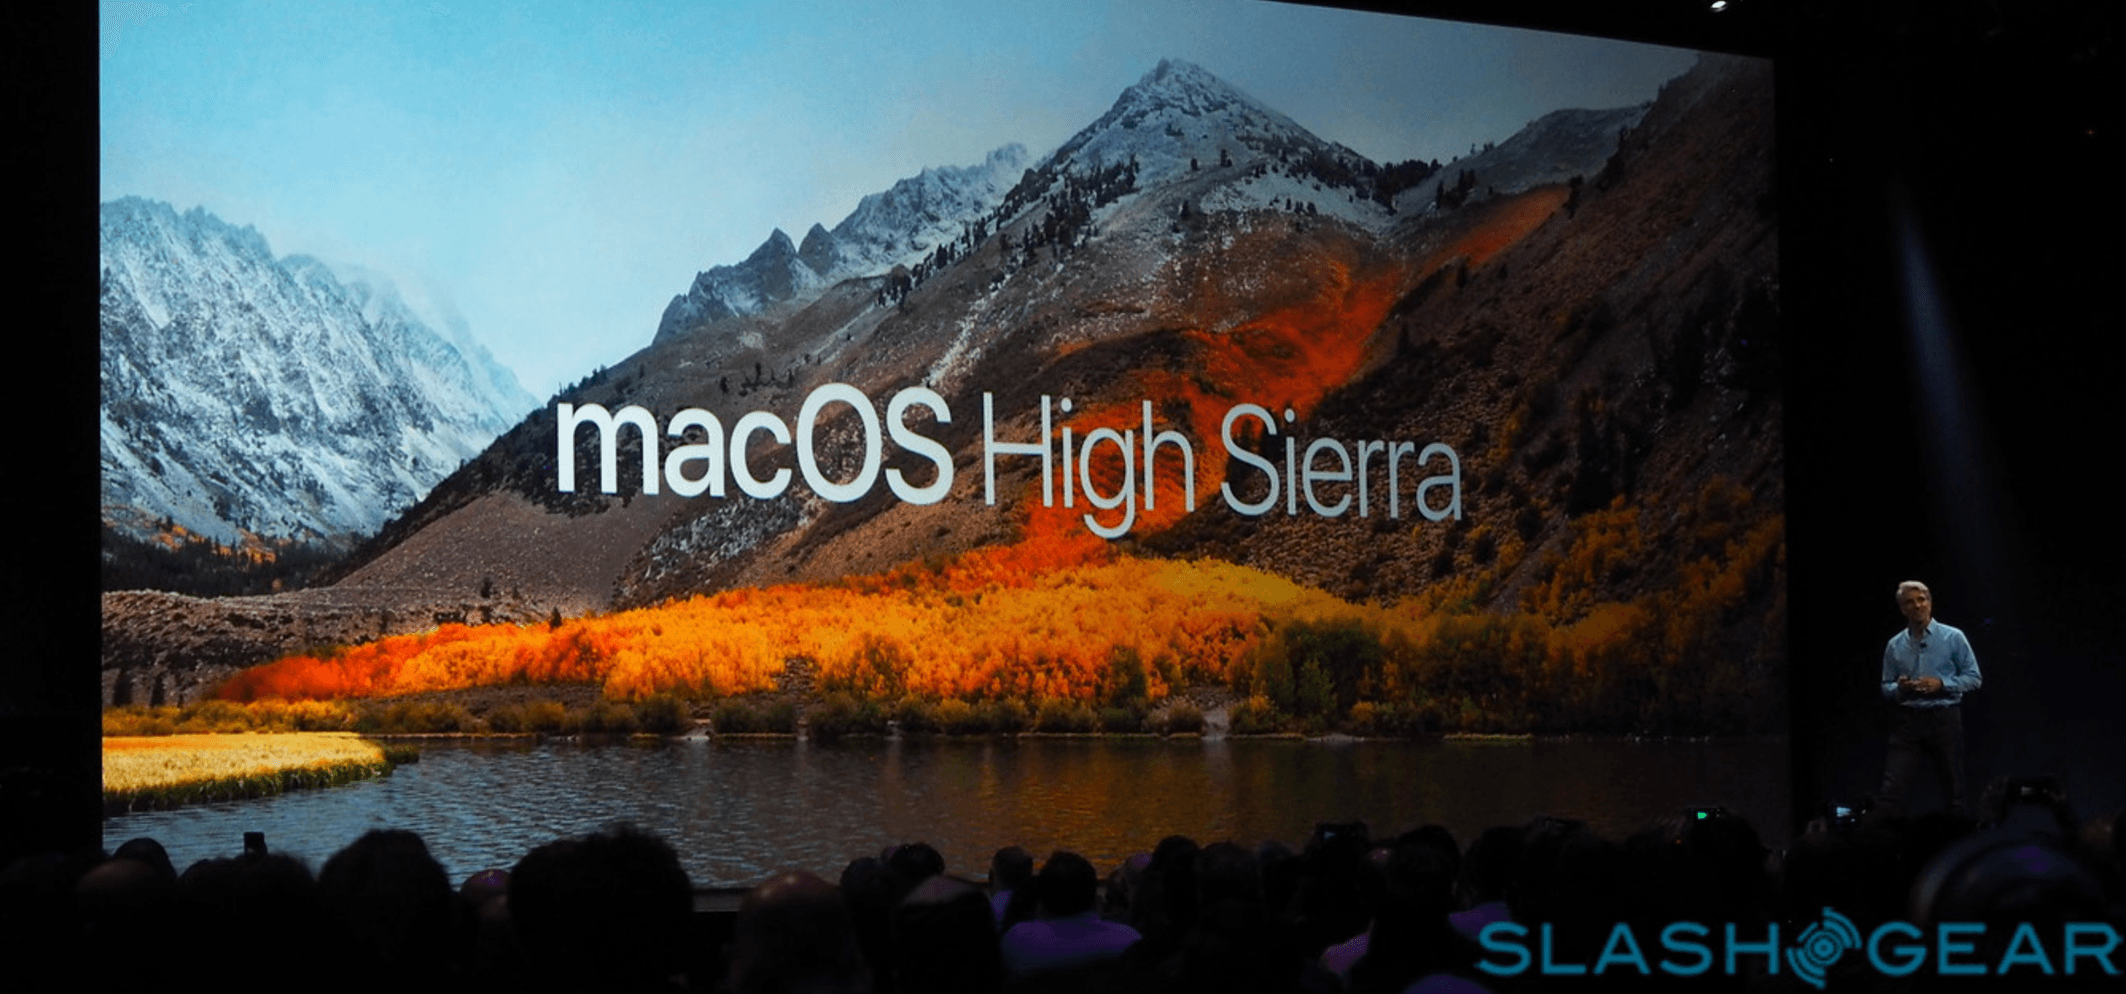 Where Can I Download Mac Os High Sierra